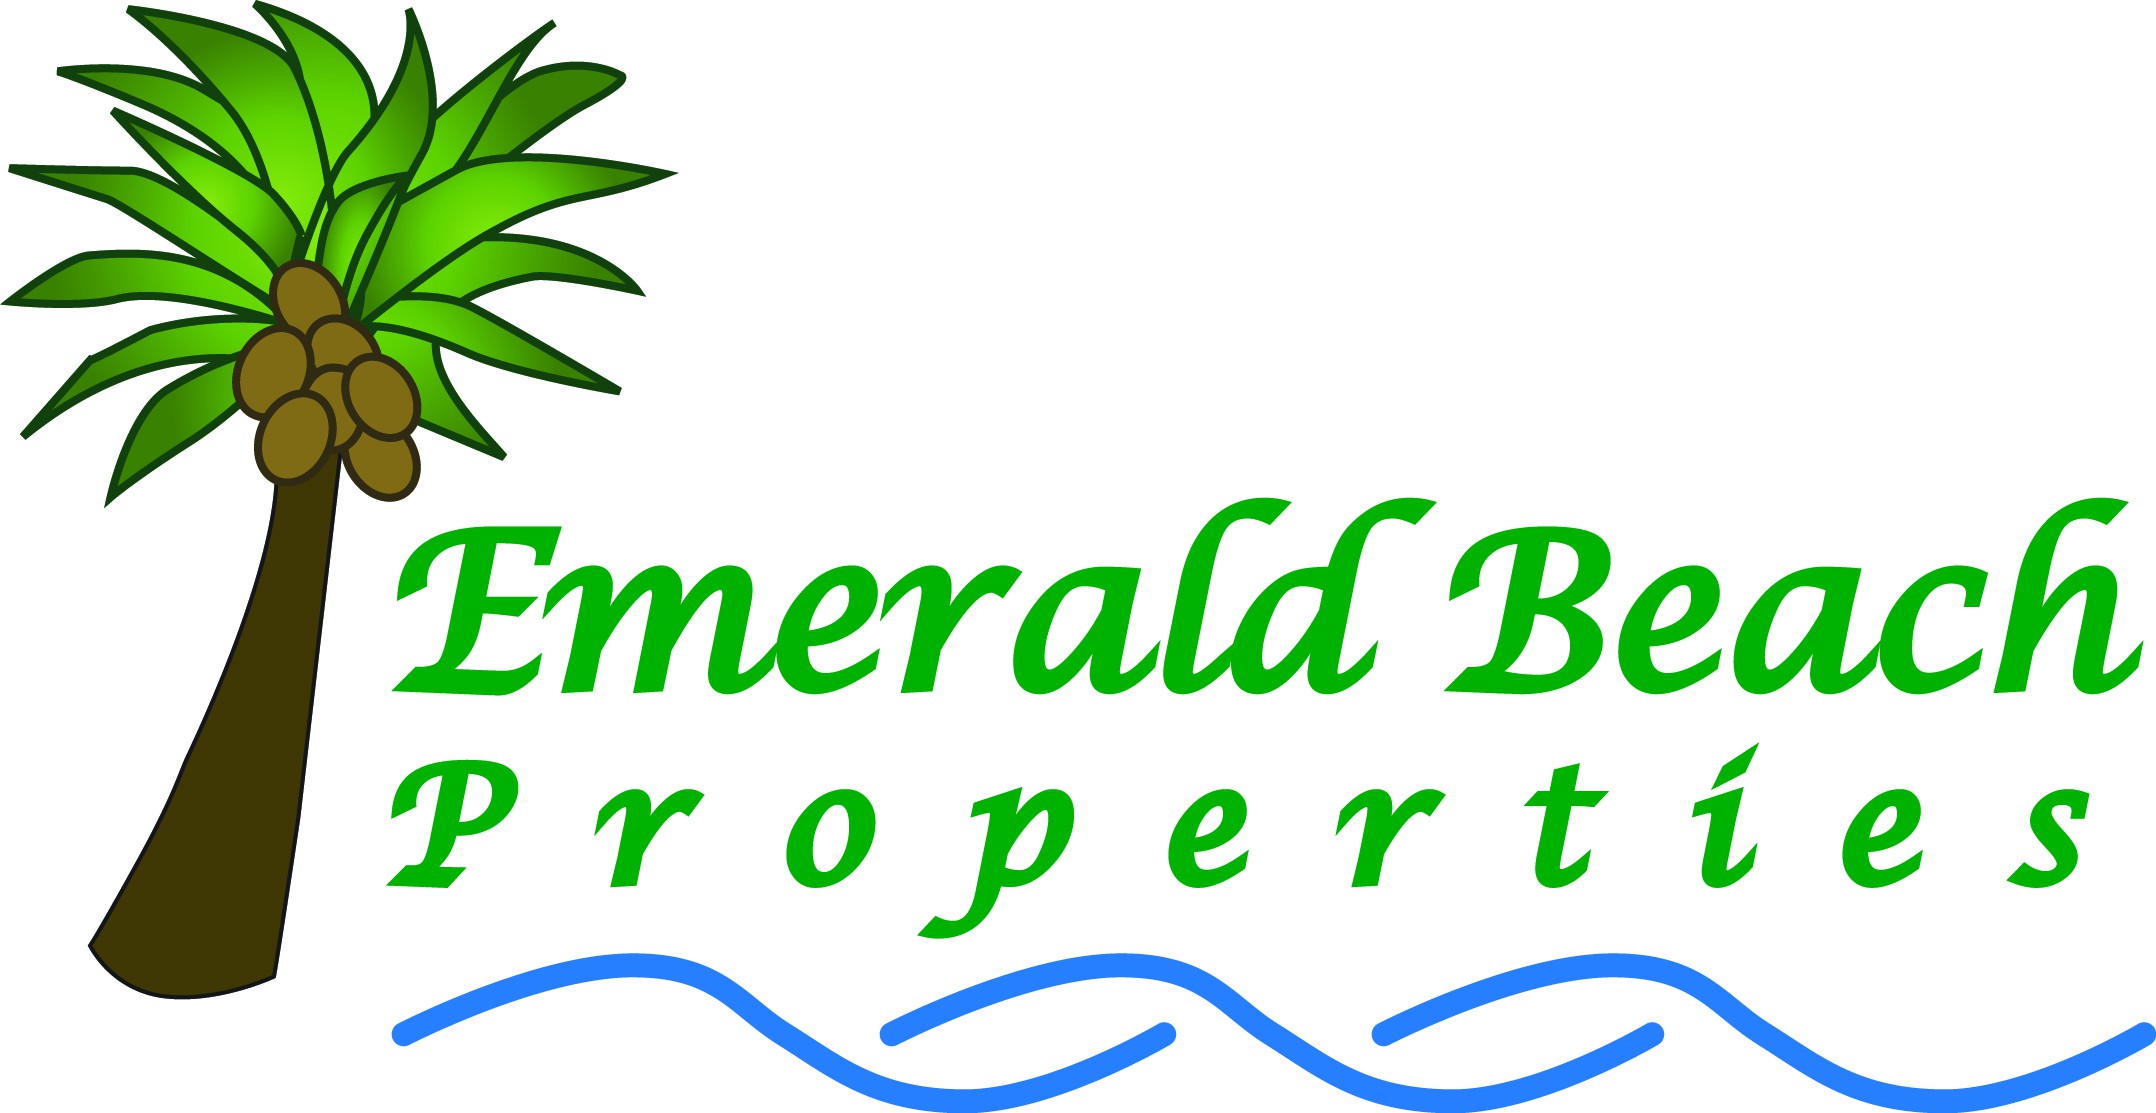 Emerald Beach Properties, Vacation Rentals in Panama City Beach, Florida!